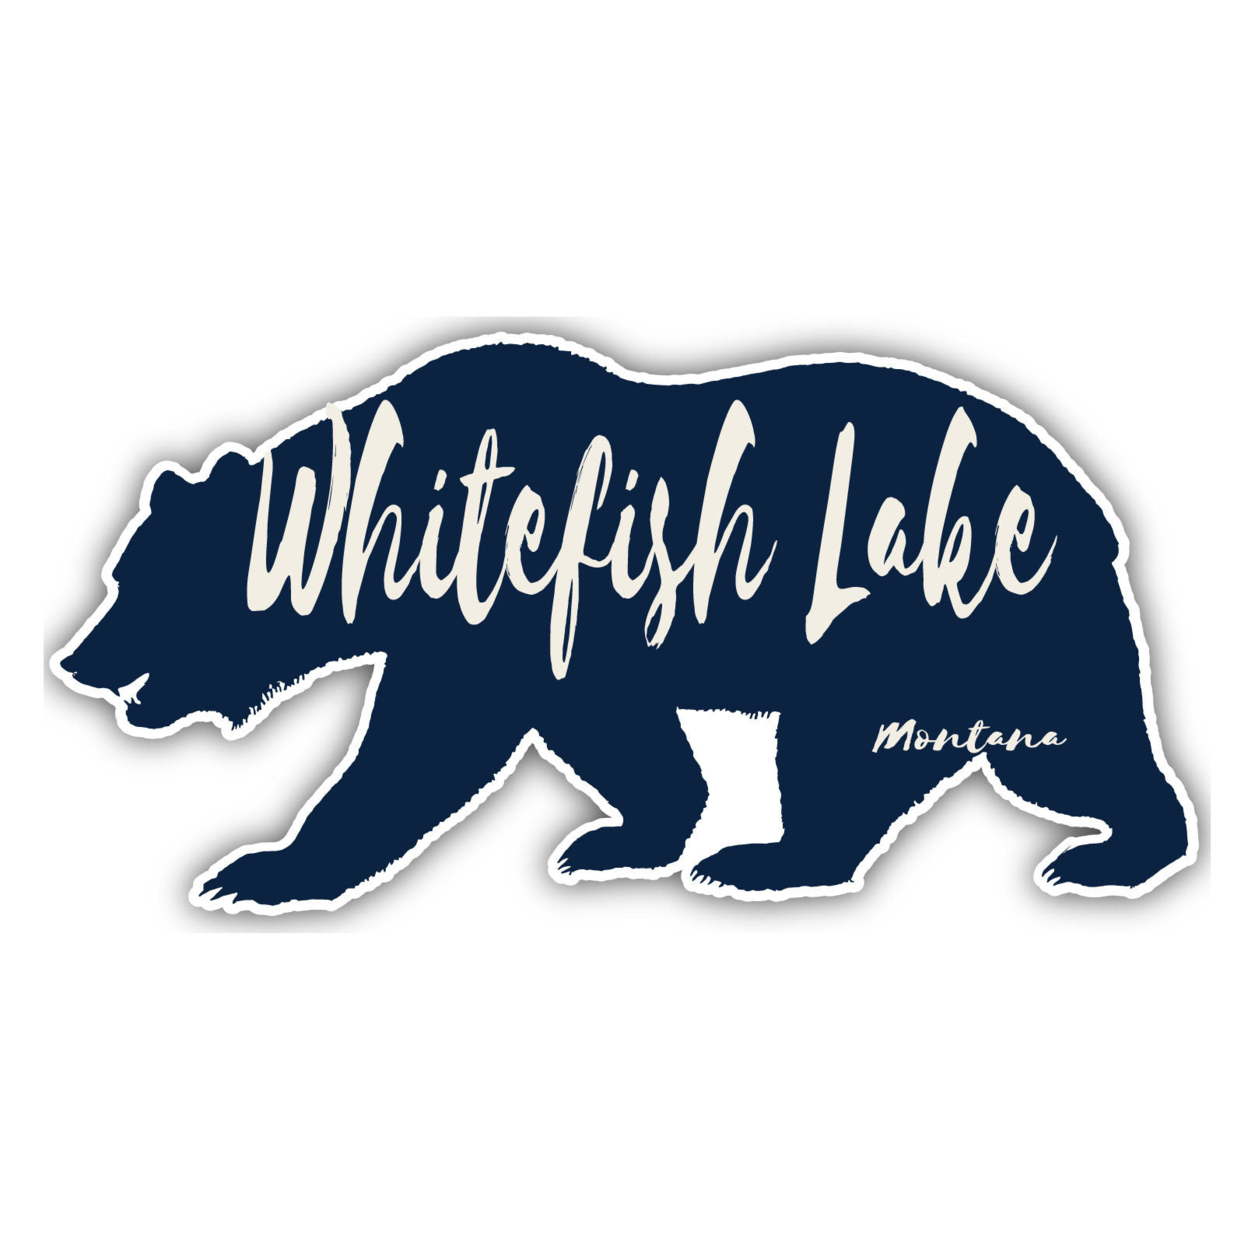 Whitefish Lake Montana Souvenir Decorative Stickers (Choose Theme And Size) - Single Unit, 2-Inch, Bear